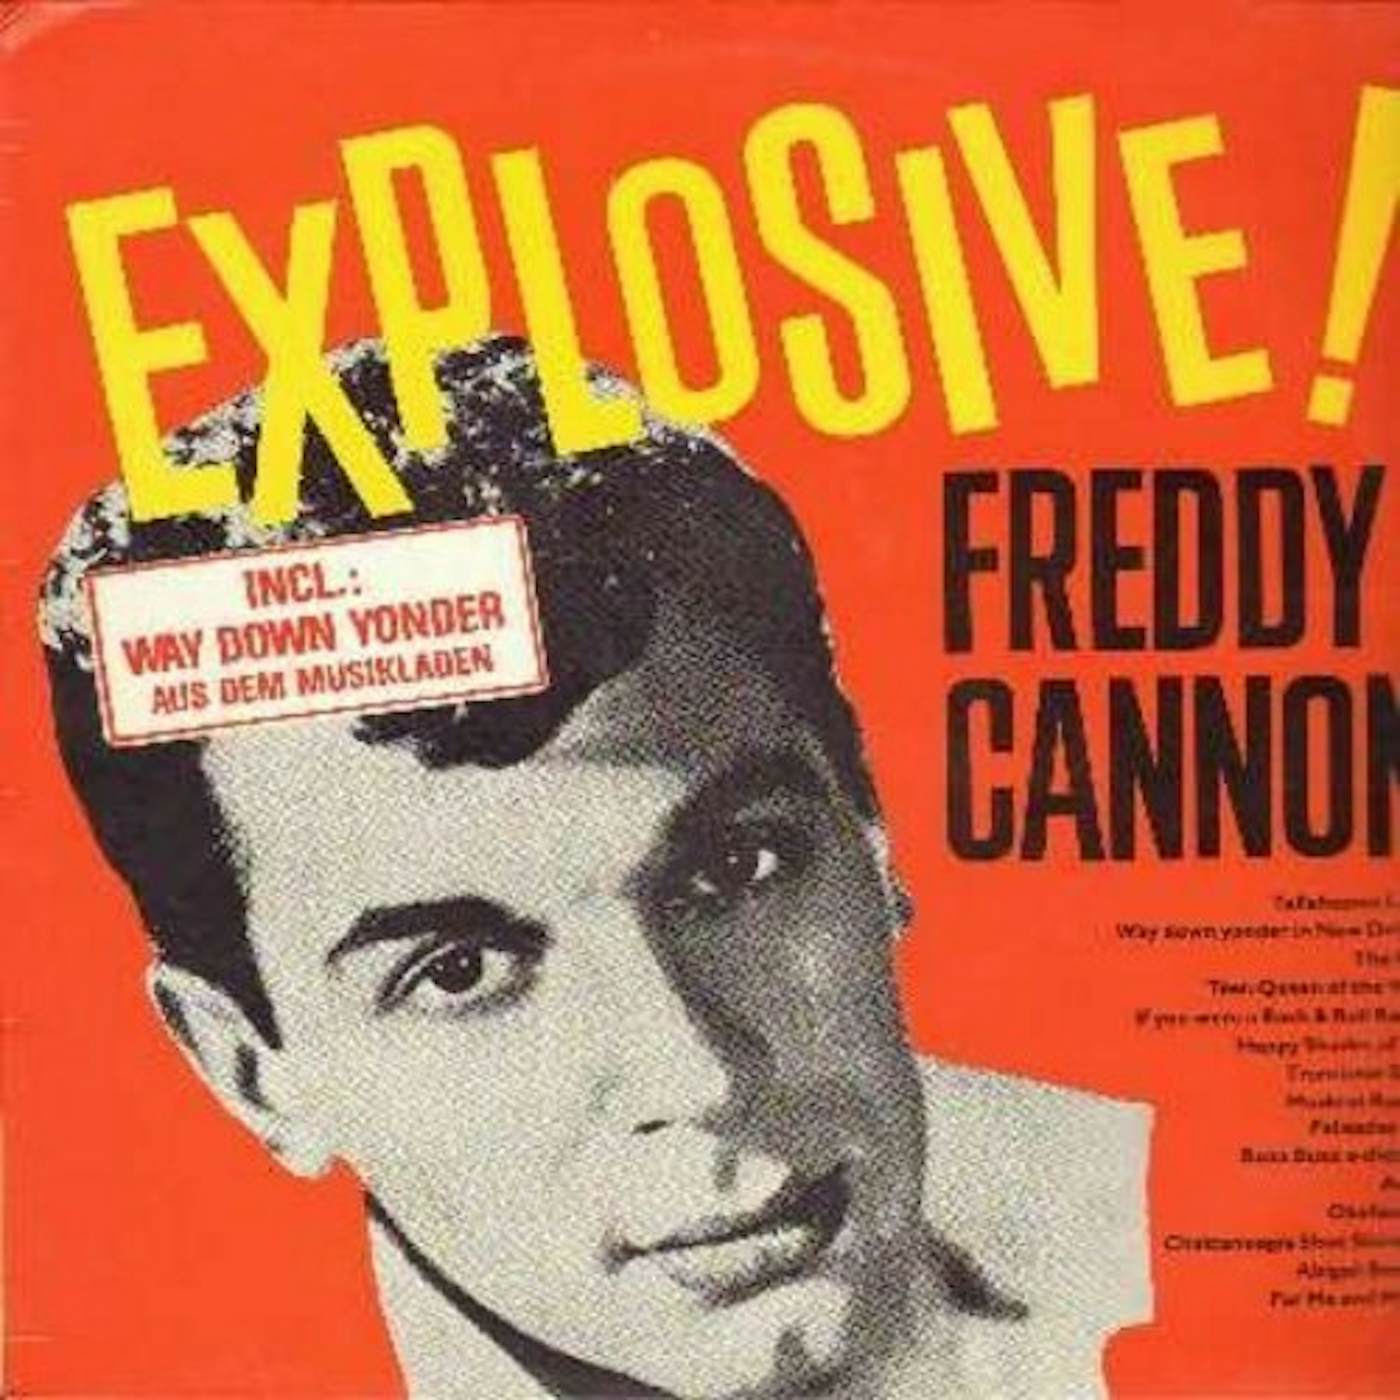 Freddy Cannon EXPLOSIVE / SINGS HAPPY SHADES OF BLUE + 8 BONUS CD